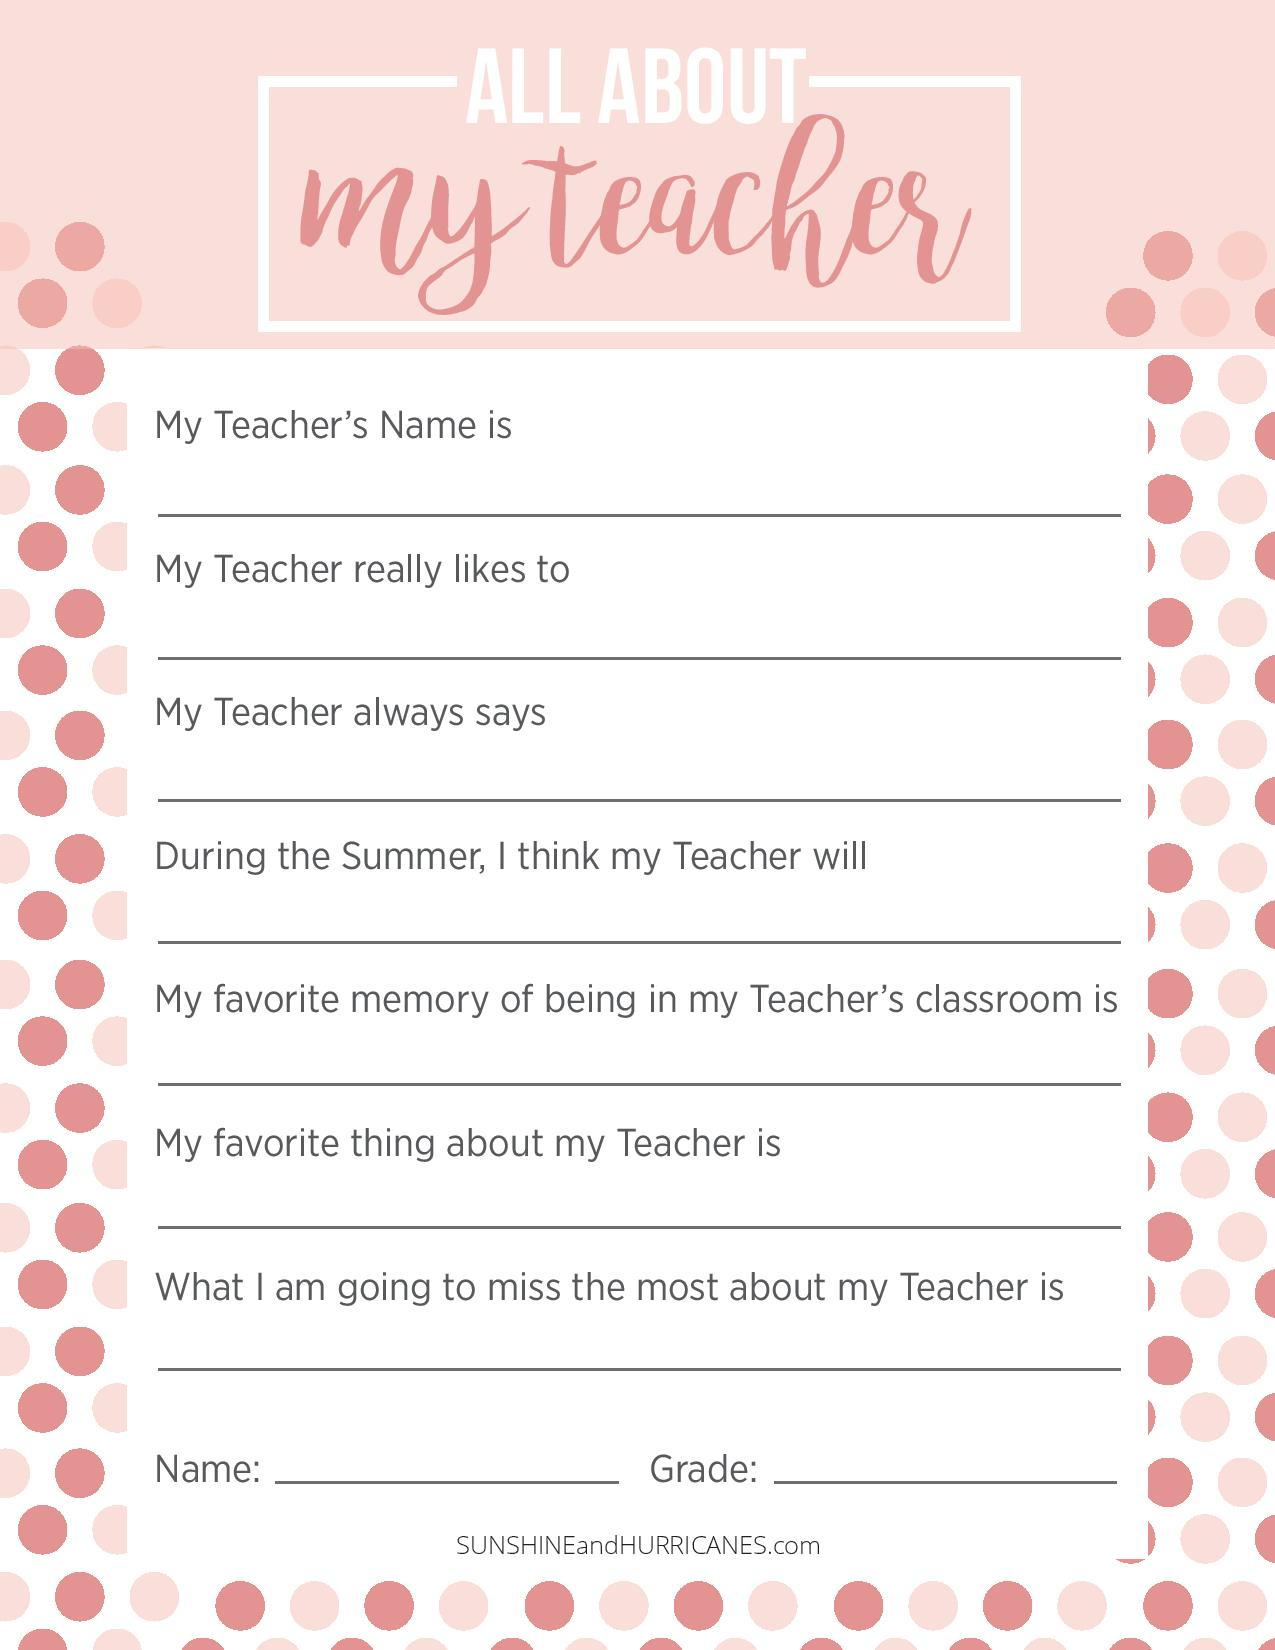 Teacher Appreciation Week Questionnaire - A Personalized Teacher Gift - All About My Teacher Free Printable